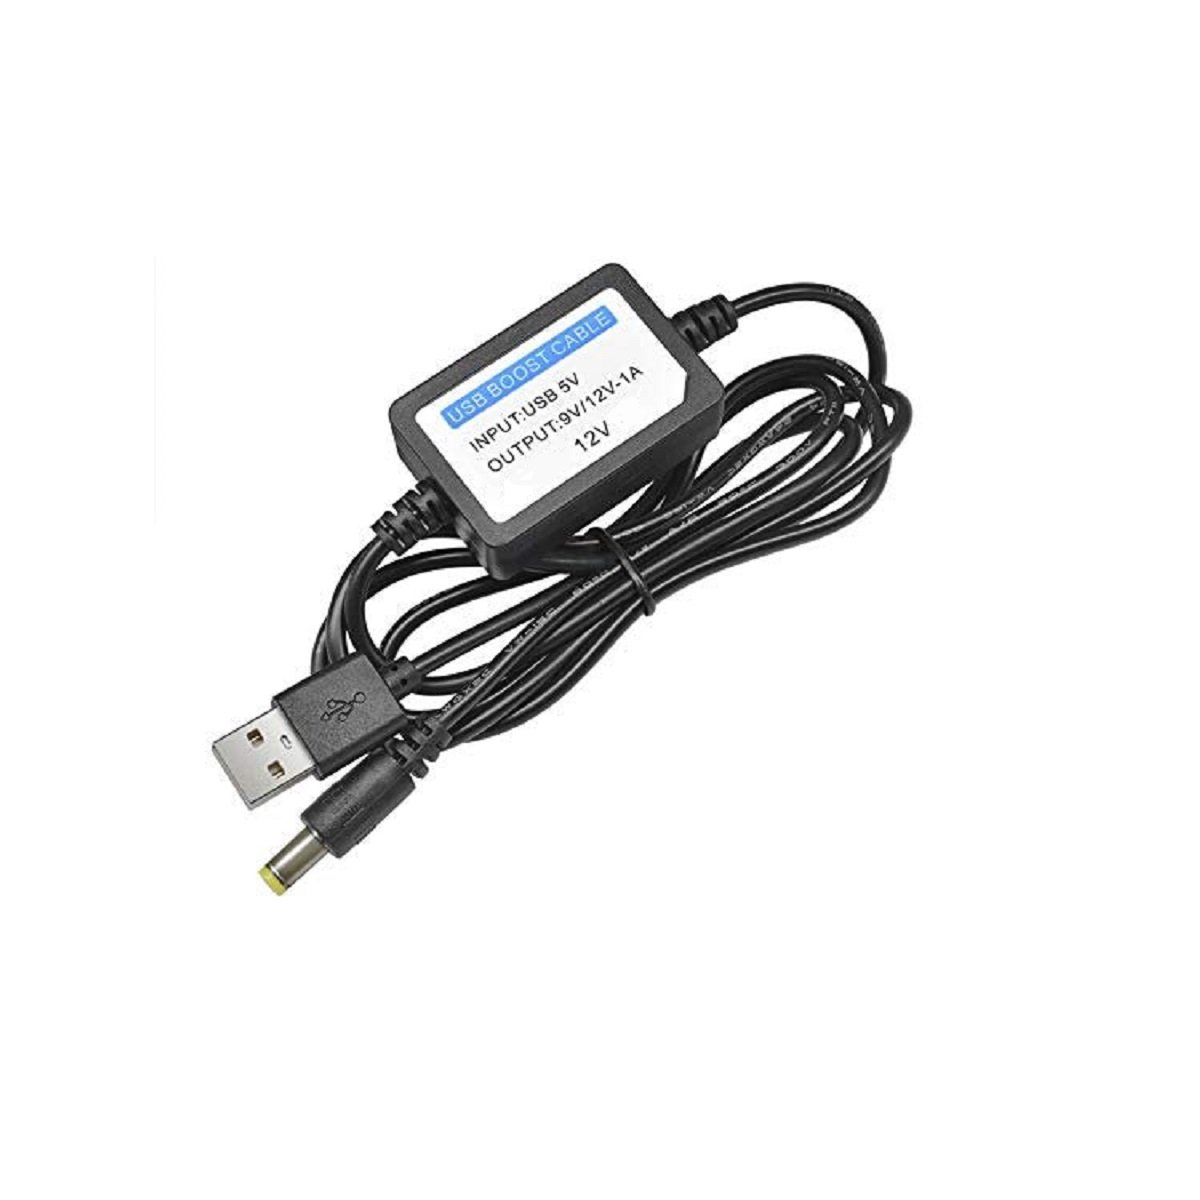 1x 4 USB Port Car Charger LED Digital Display Tool Vehicle